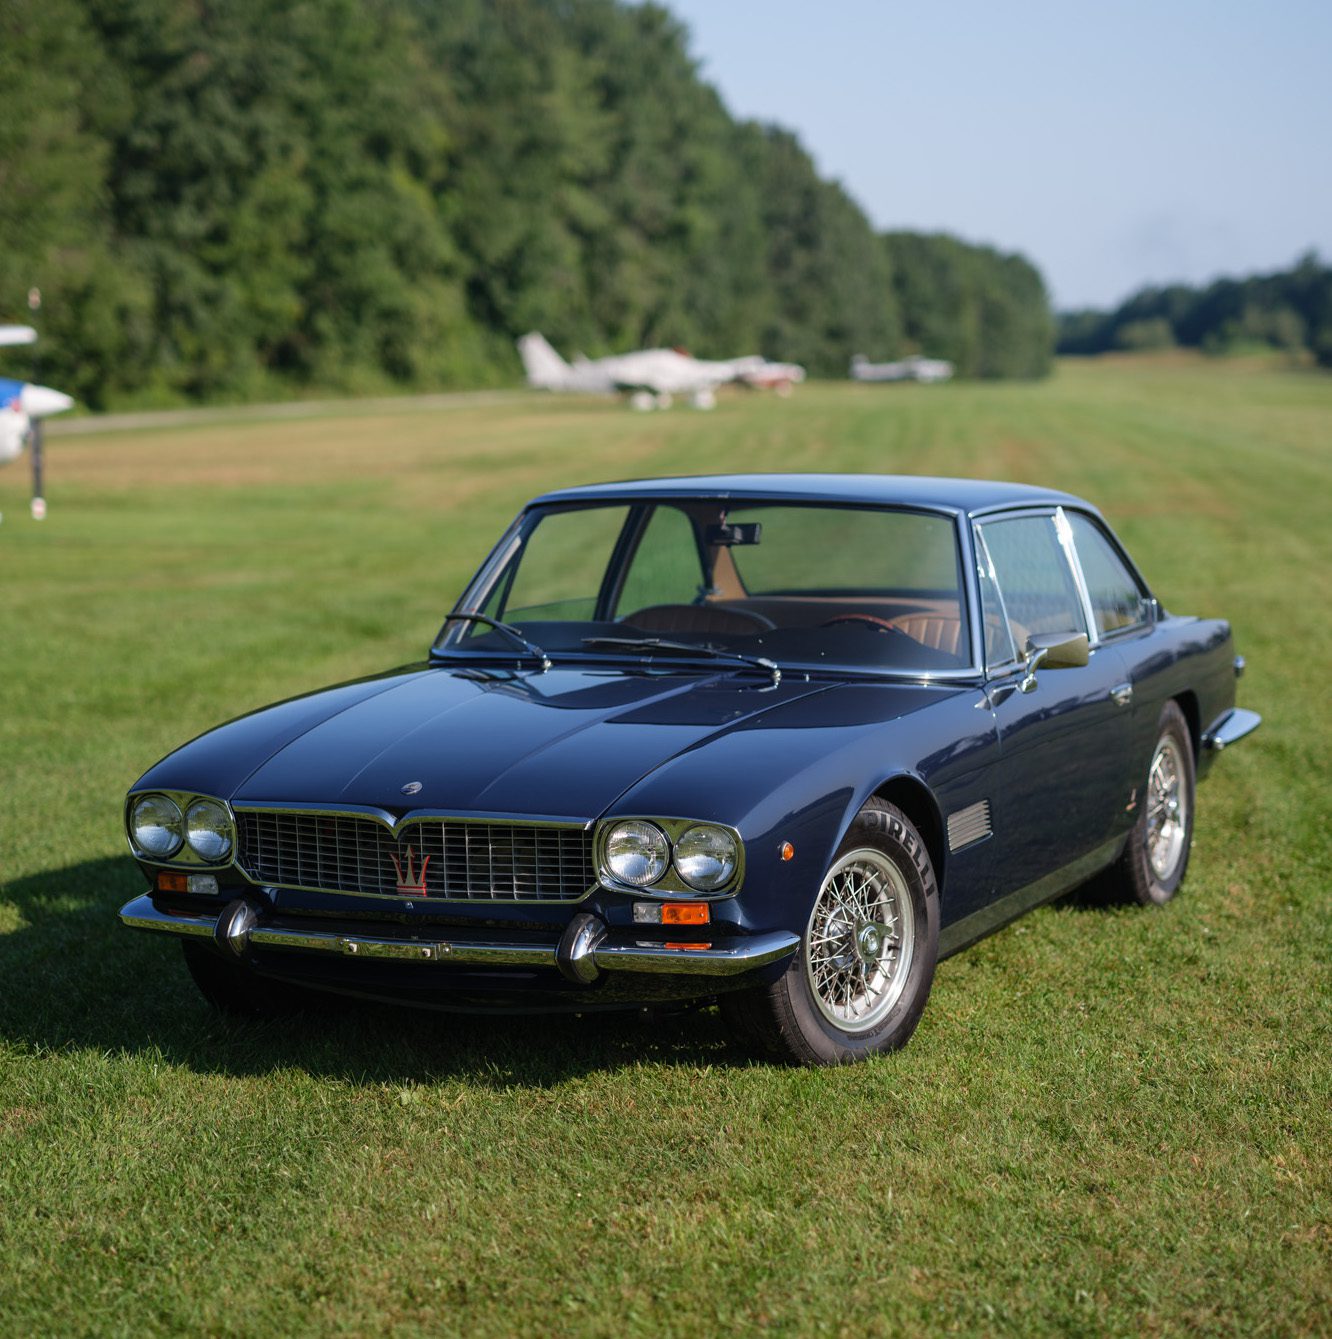 1967 Maserati Mexico. Rare 4.7 litre version. Fast, stylish and fully restored…